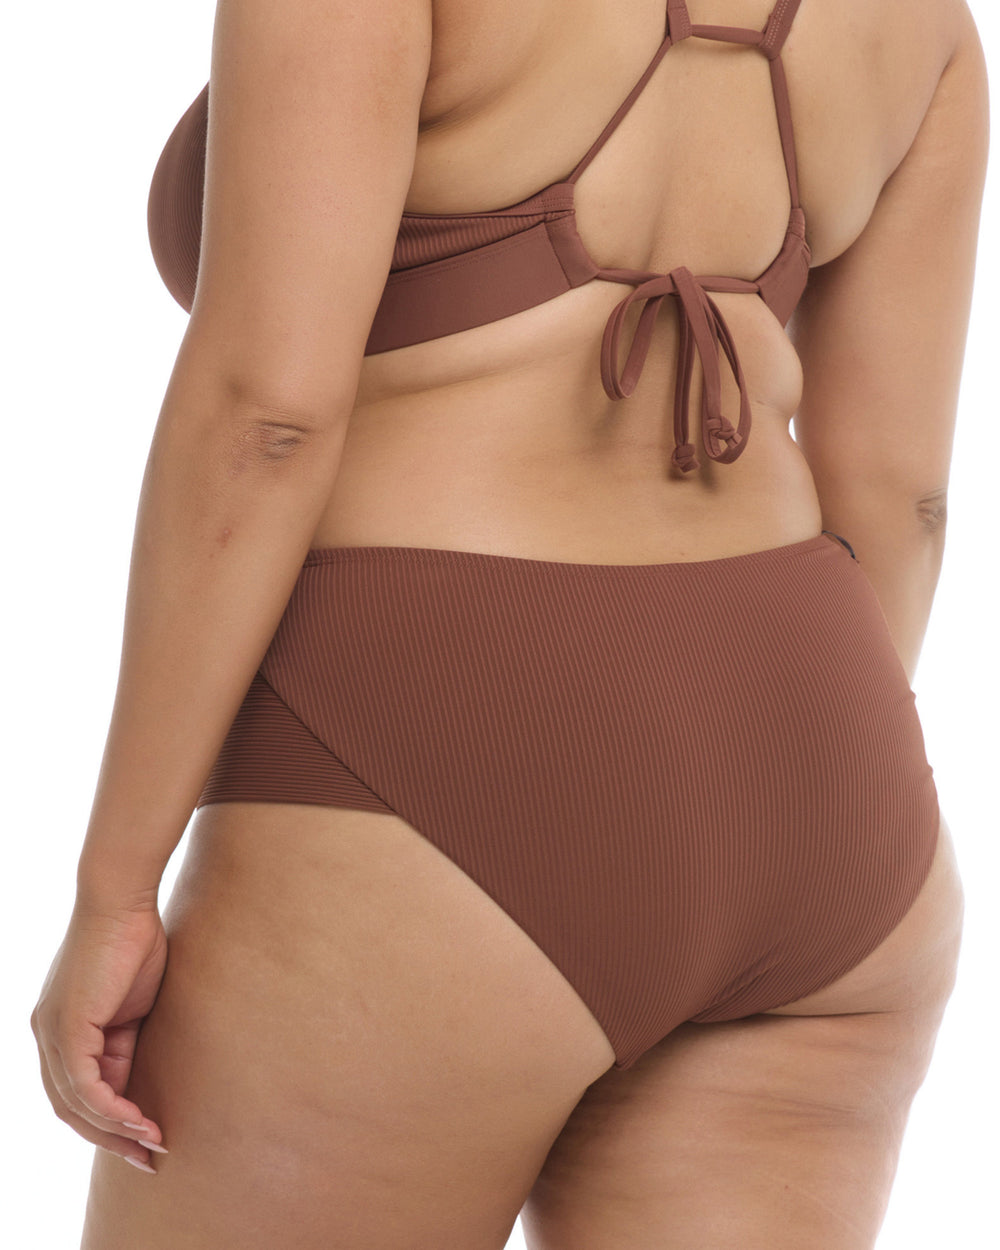 Ibiza Coco Plus Size Bikini Bottom - Brown - Body Glove